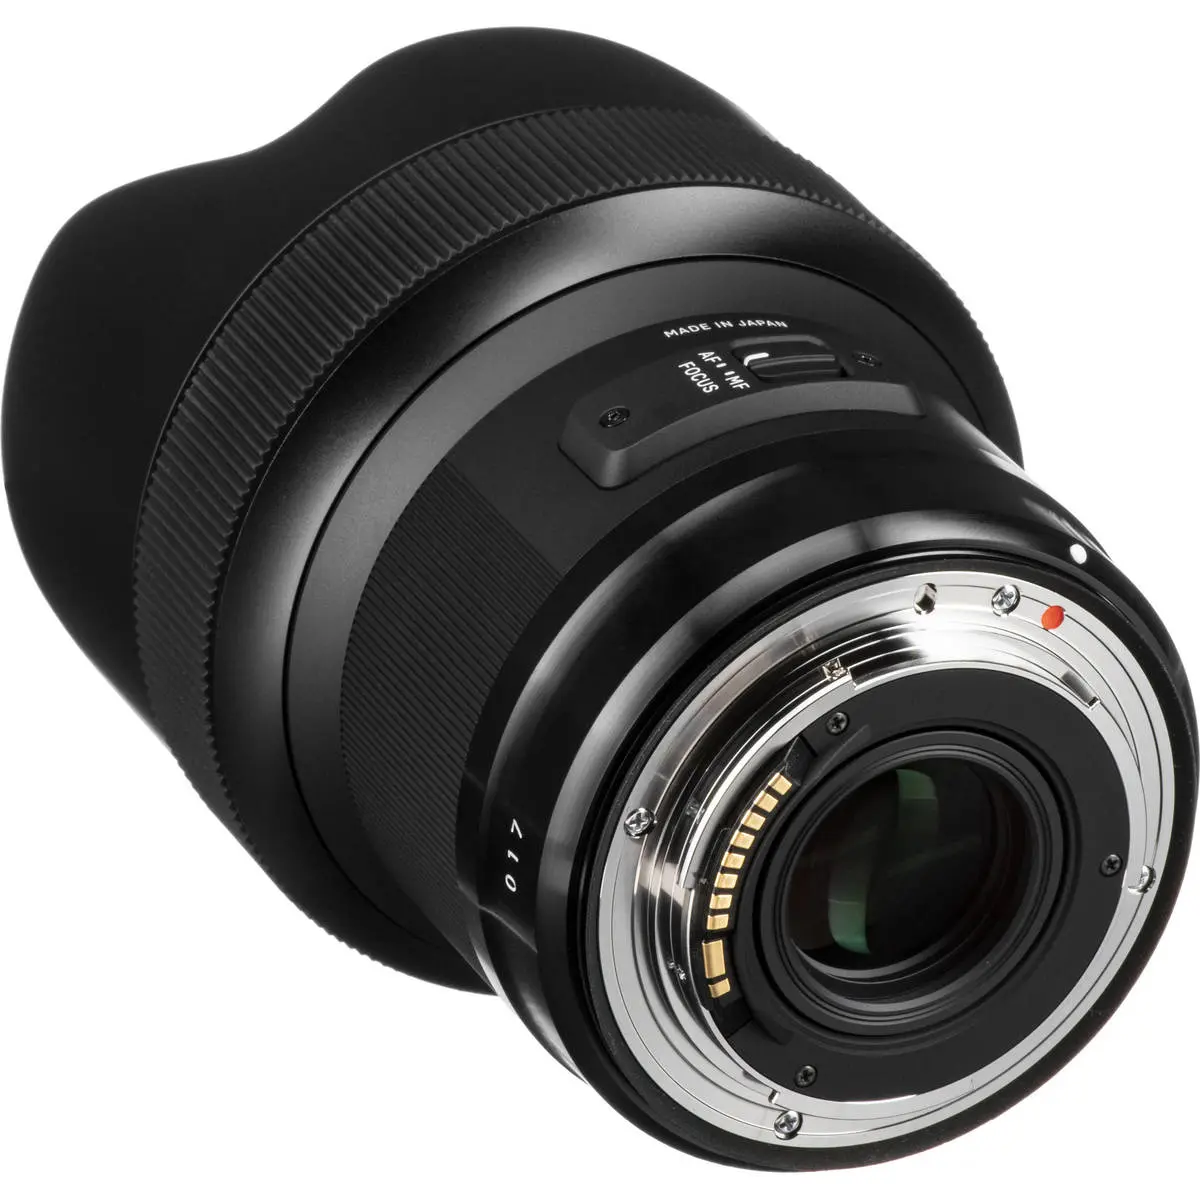 5. Sigma 14mm F1.8 DG HSM | Art (Canon) Lens